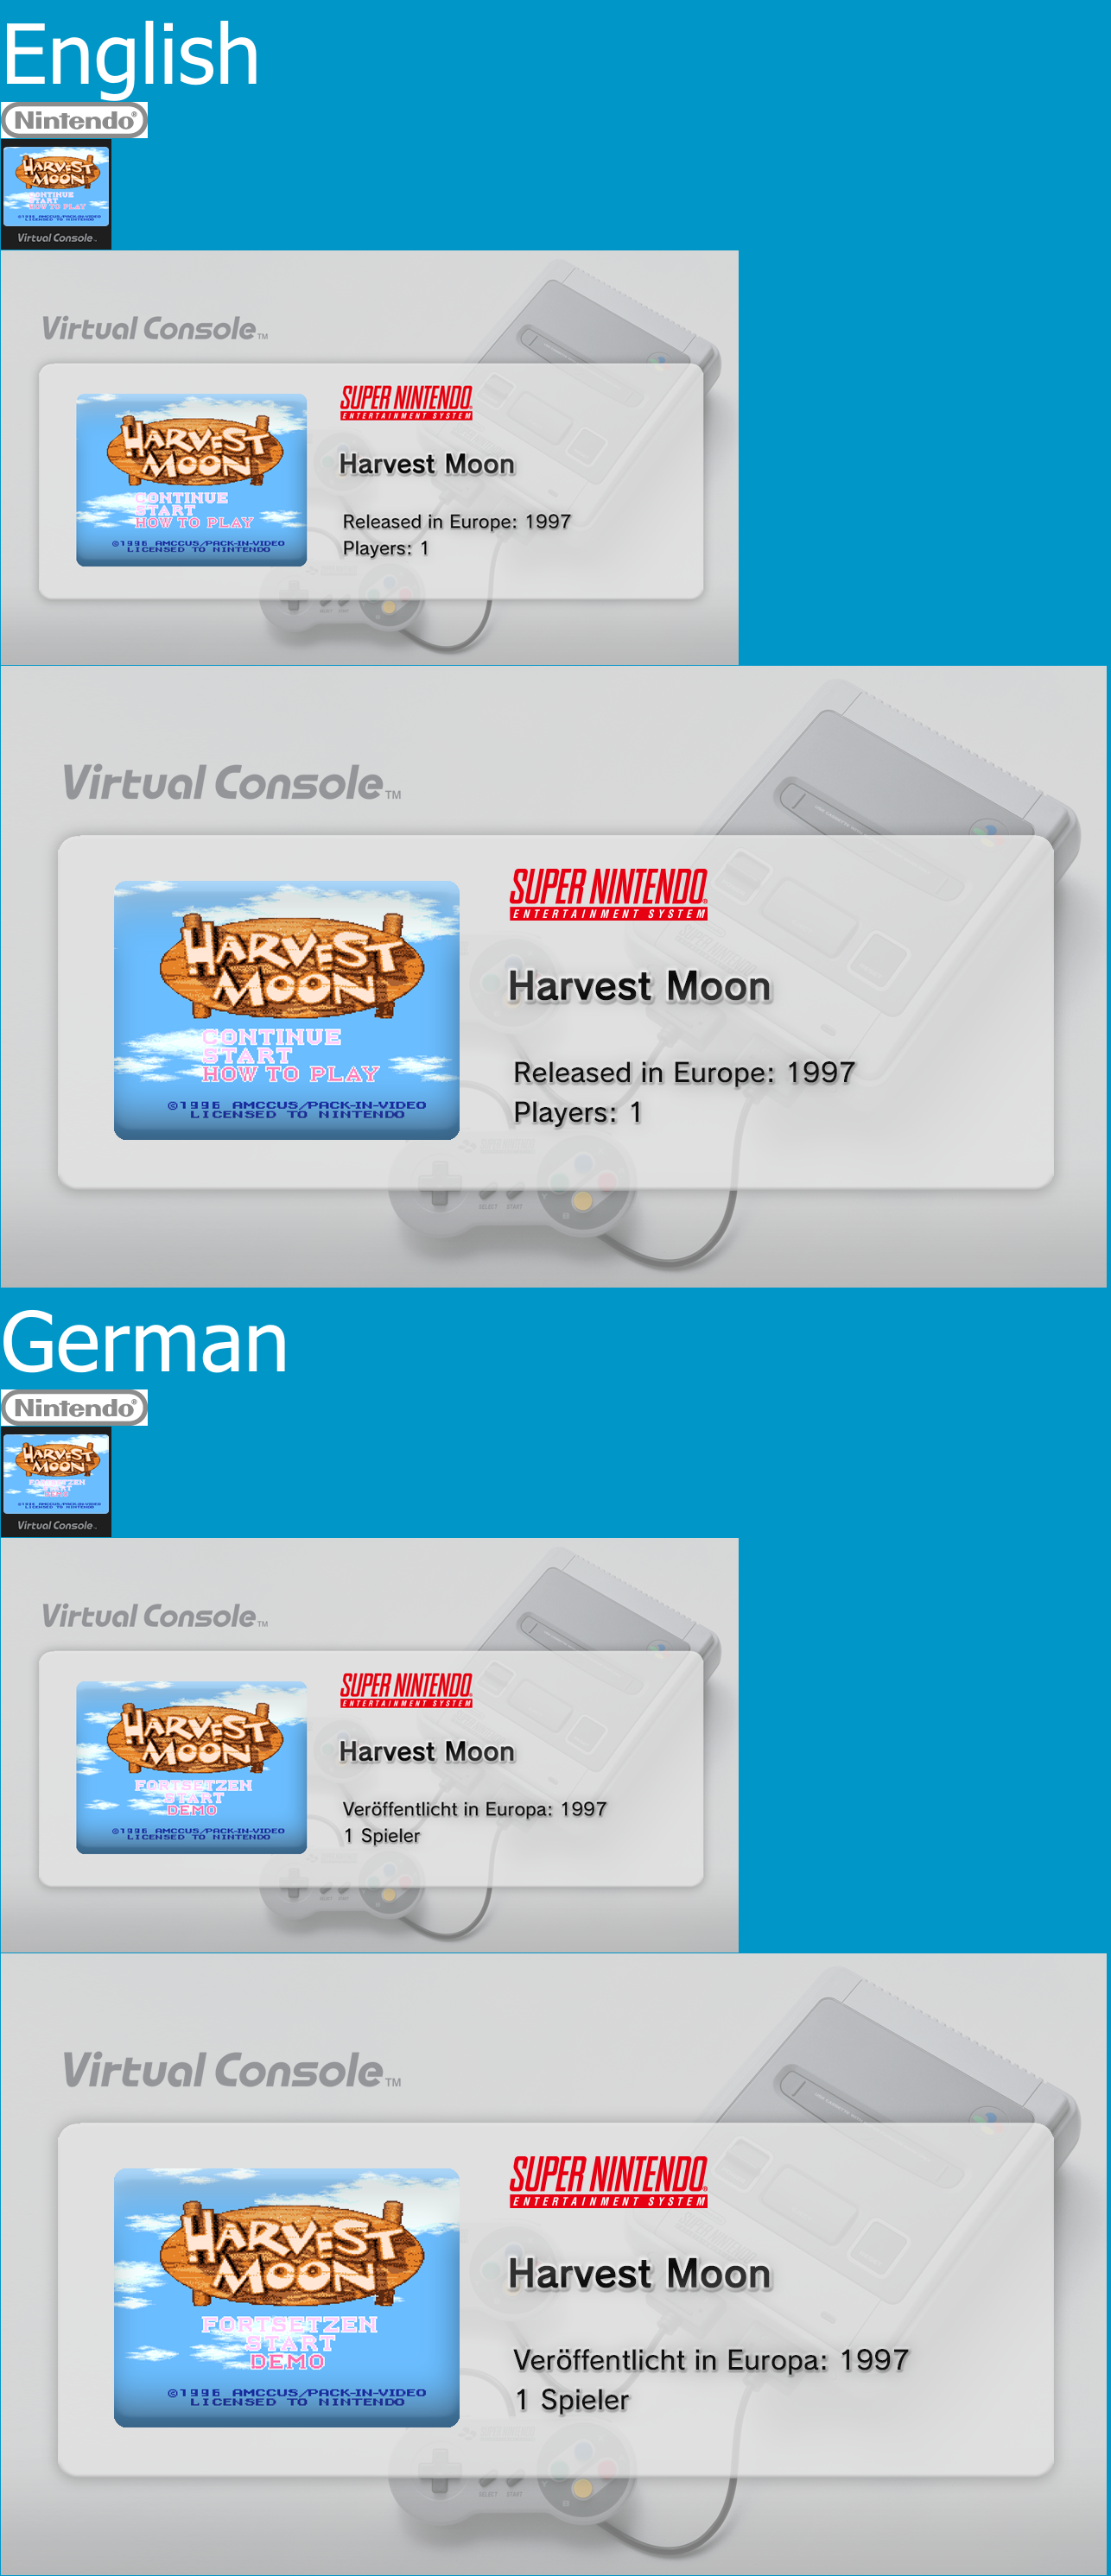 Virtual Console - Harvest Moon